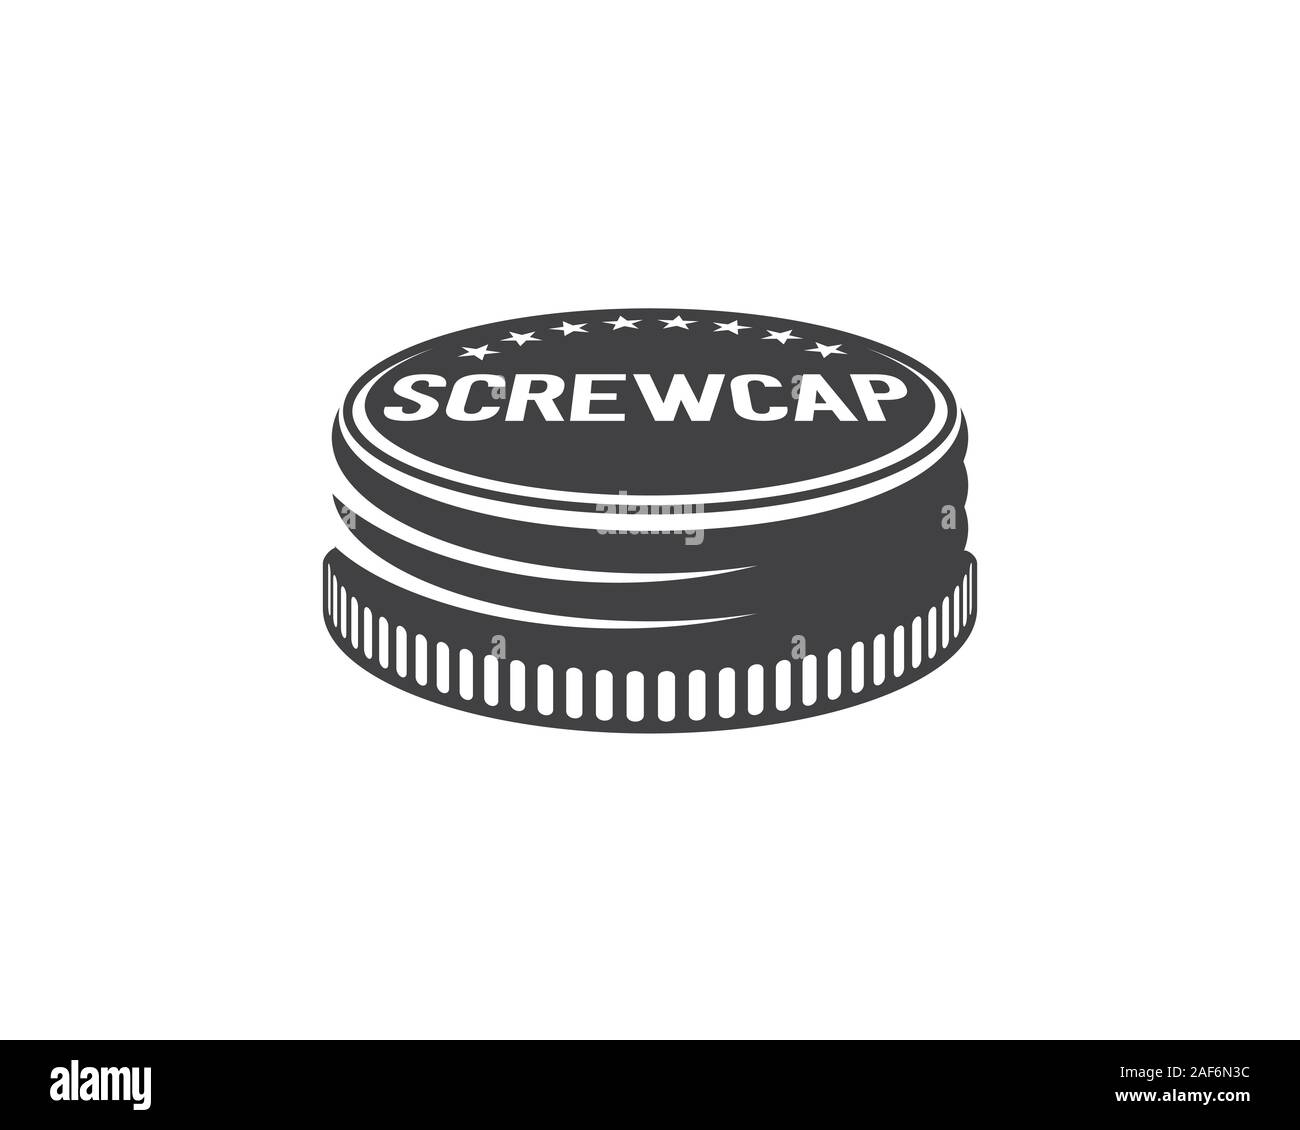 monochrome screw cap retro logo Stock Vector